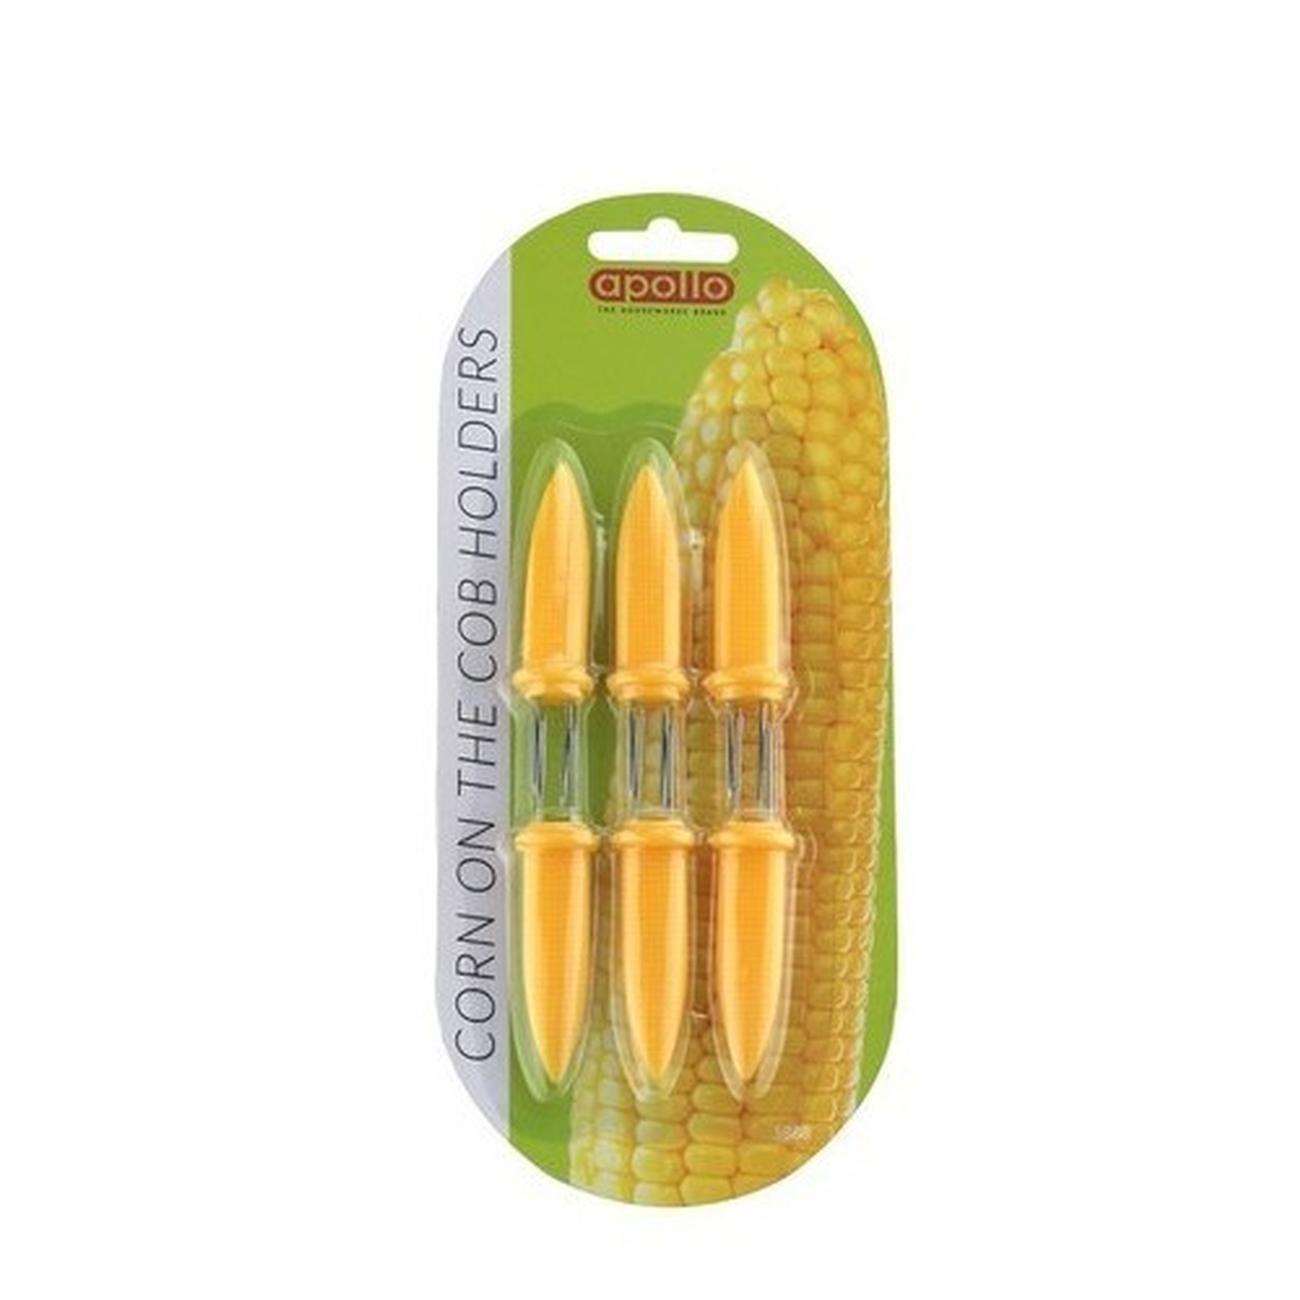 apollo-corn-on-the-cob-skewers-6-piece-set - Apollo Corn Cob Skewers Set of 6